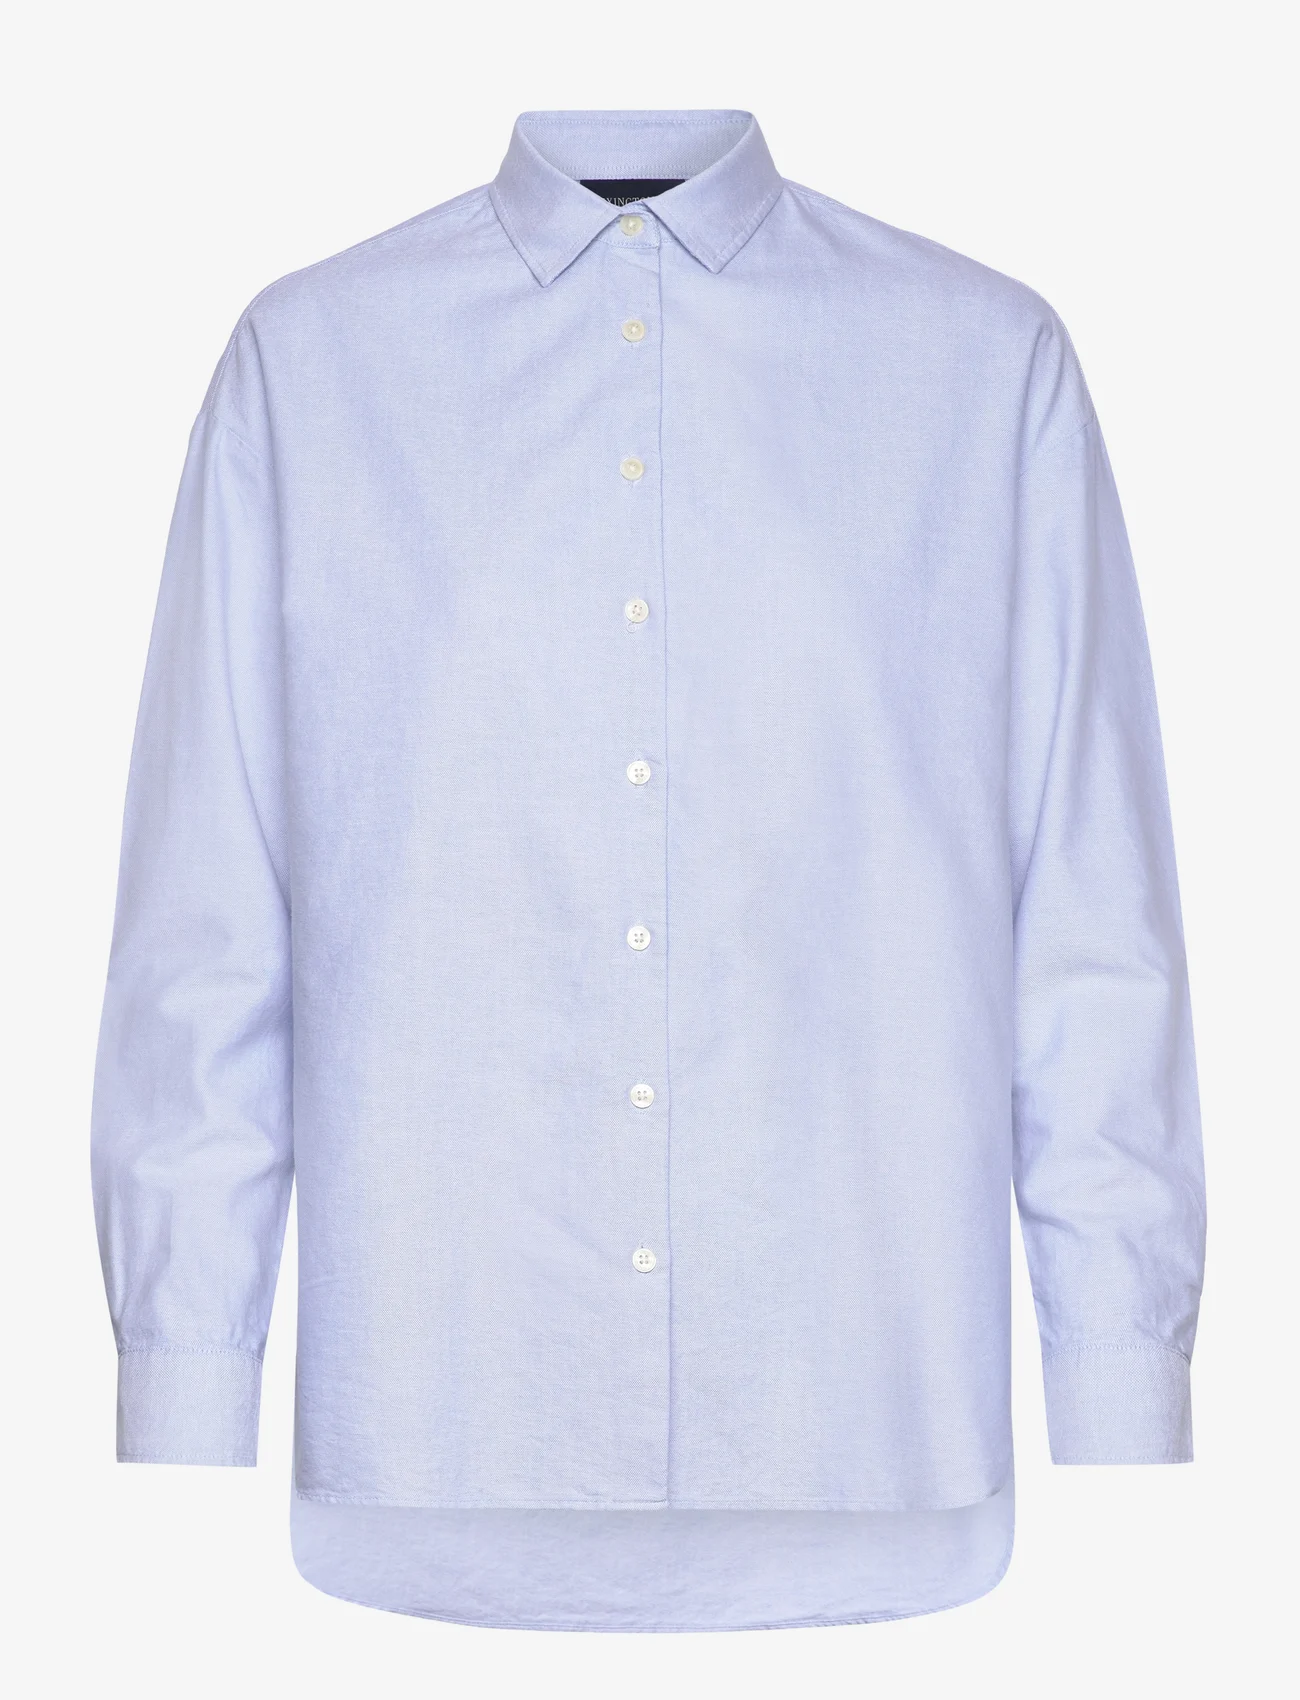 Lexington Clothing - Edith Organic Cotton Oxford Shirt - long-sleeved shirts - light blue - 0